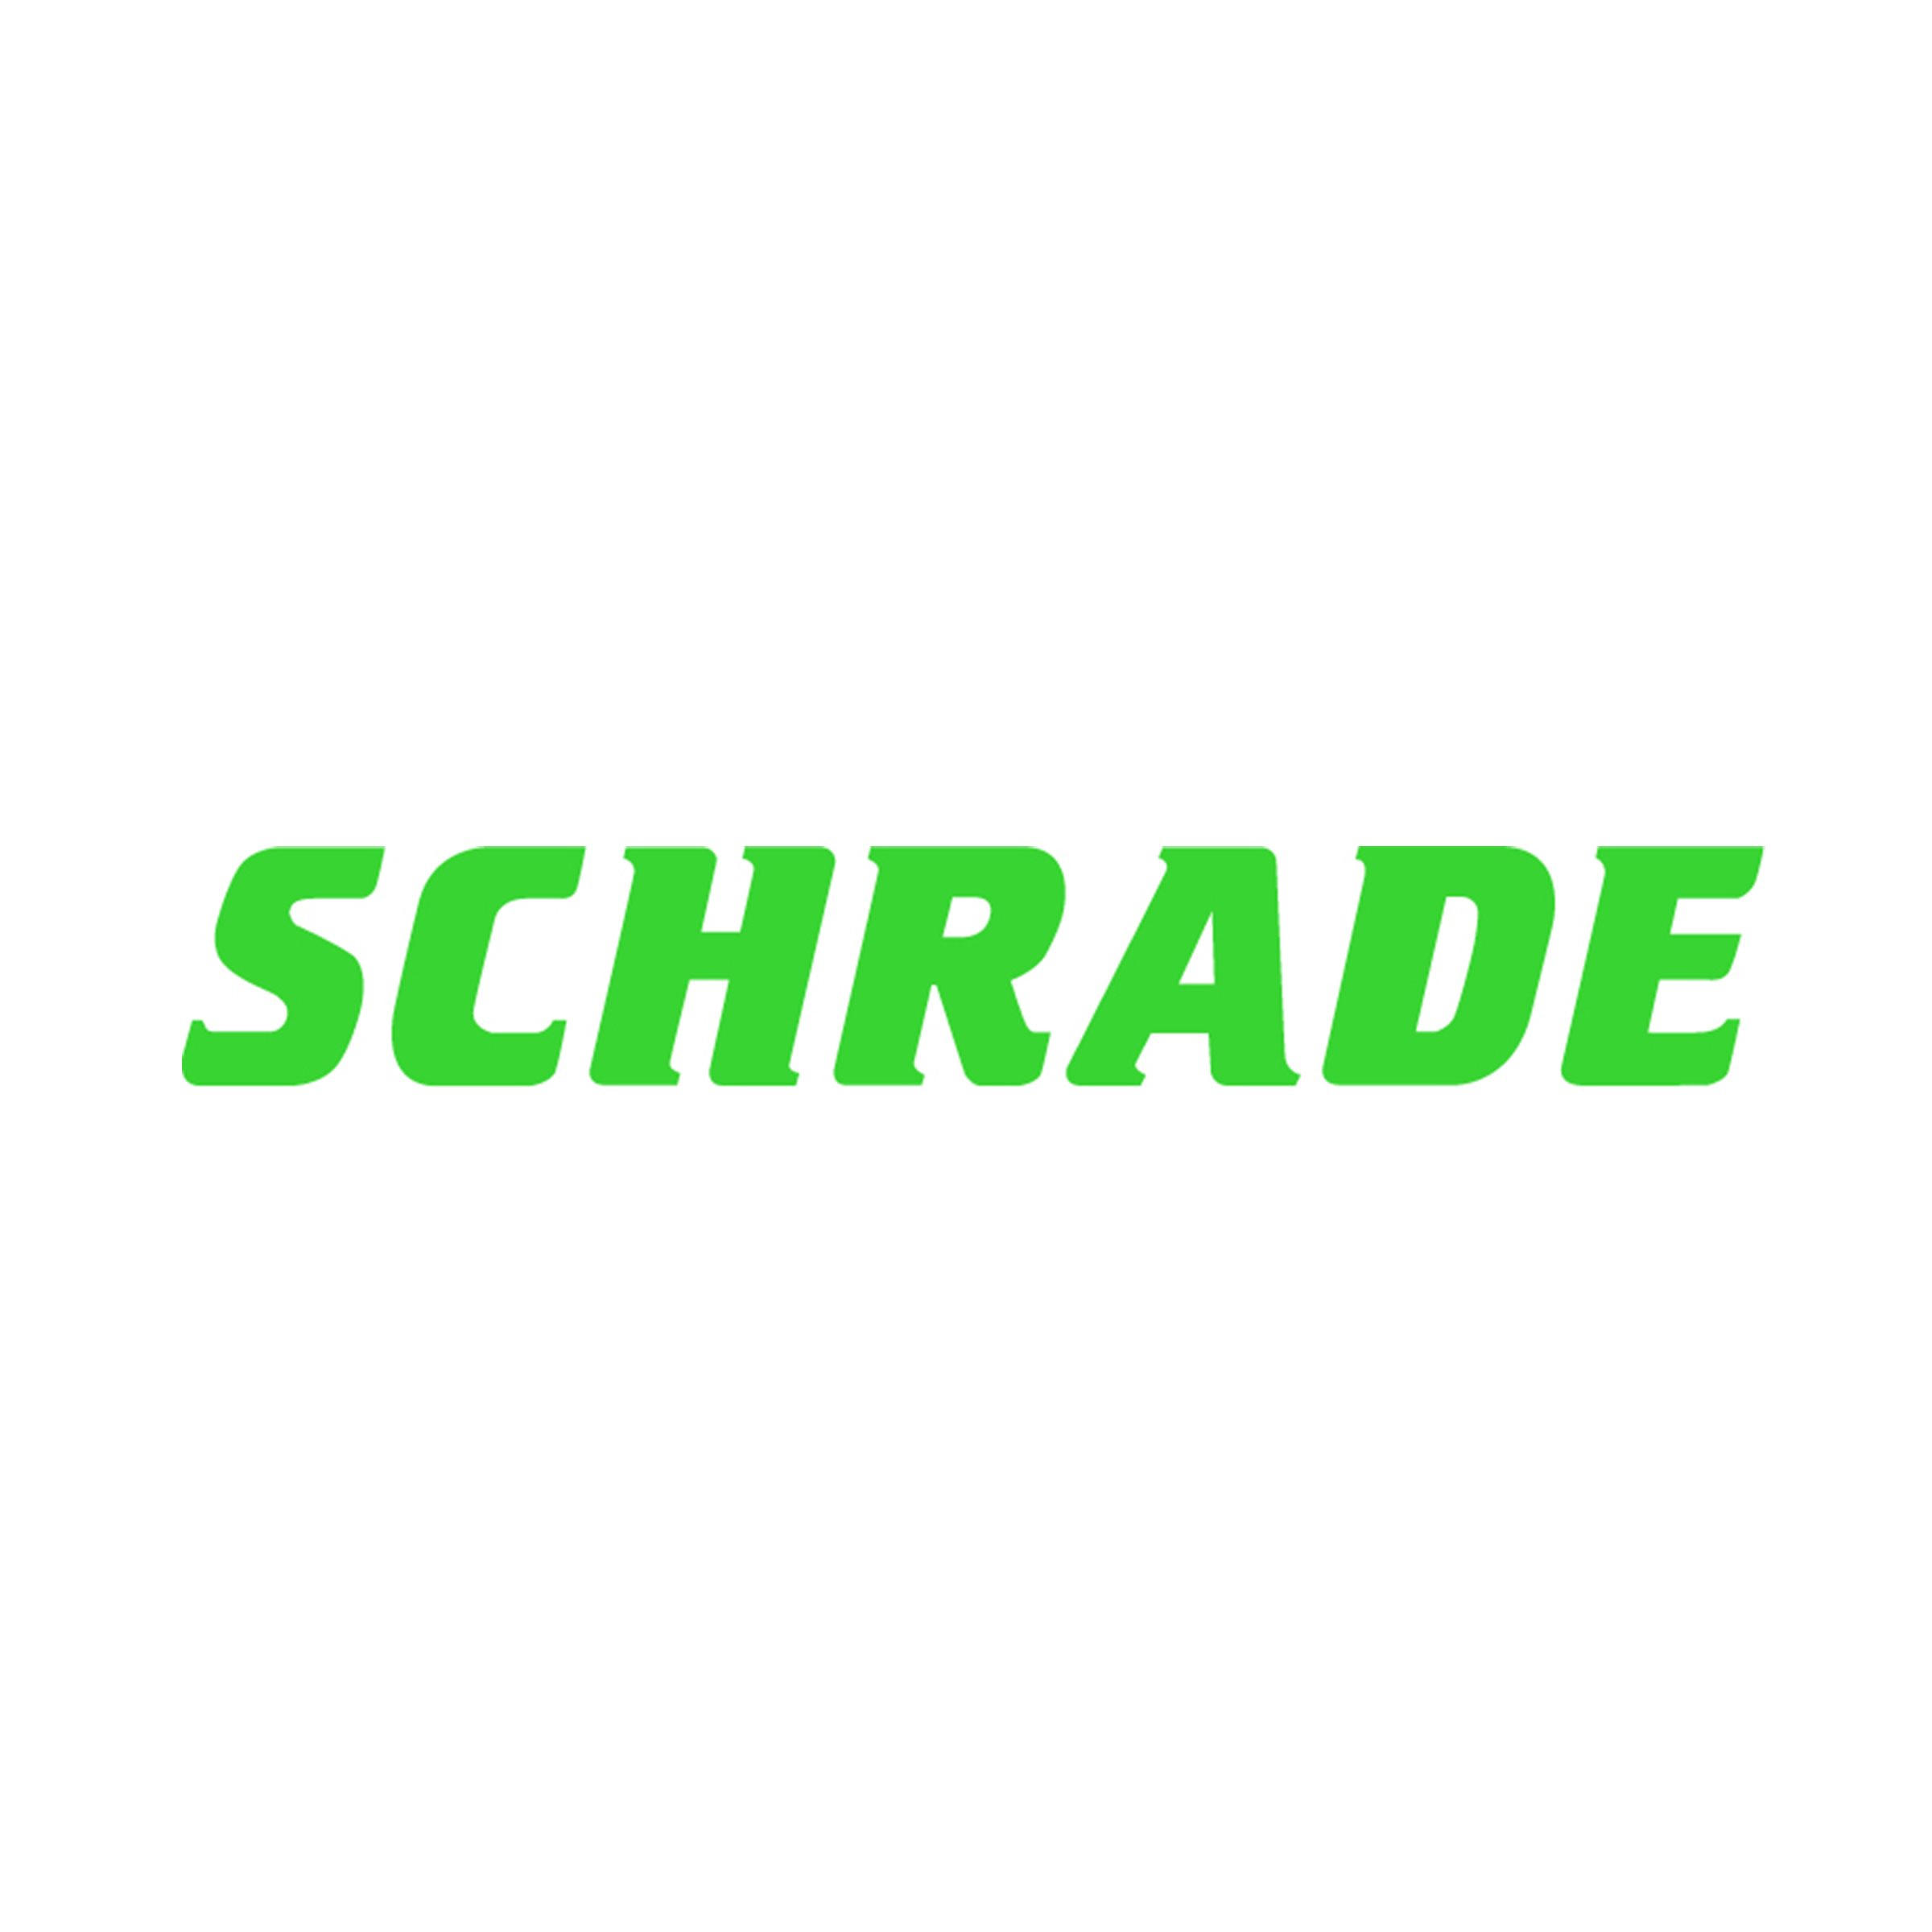 A_Schrade